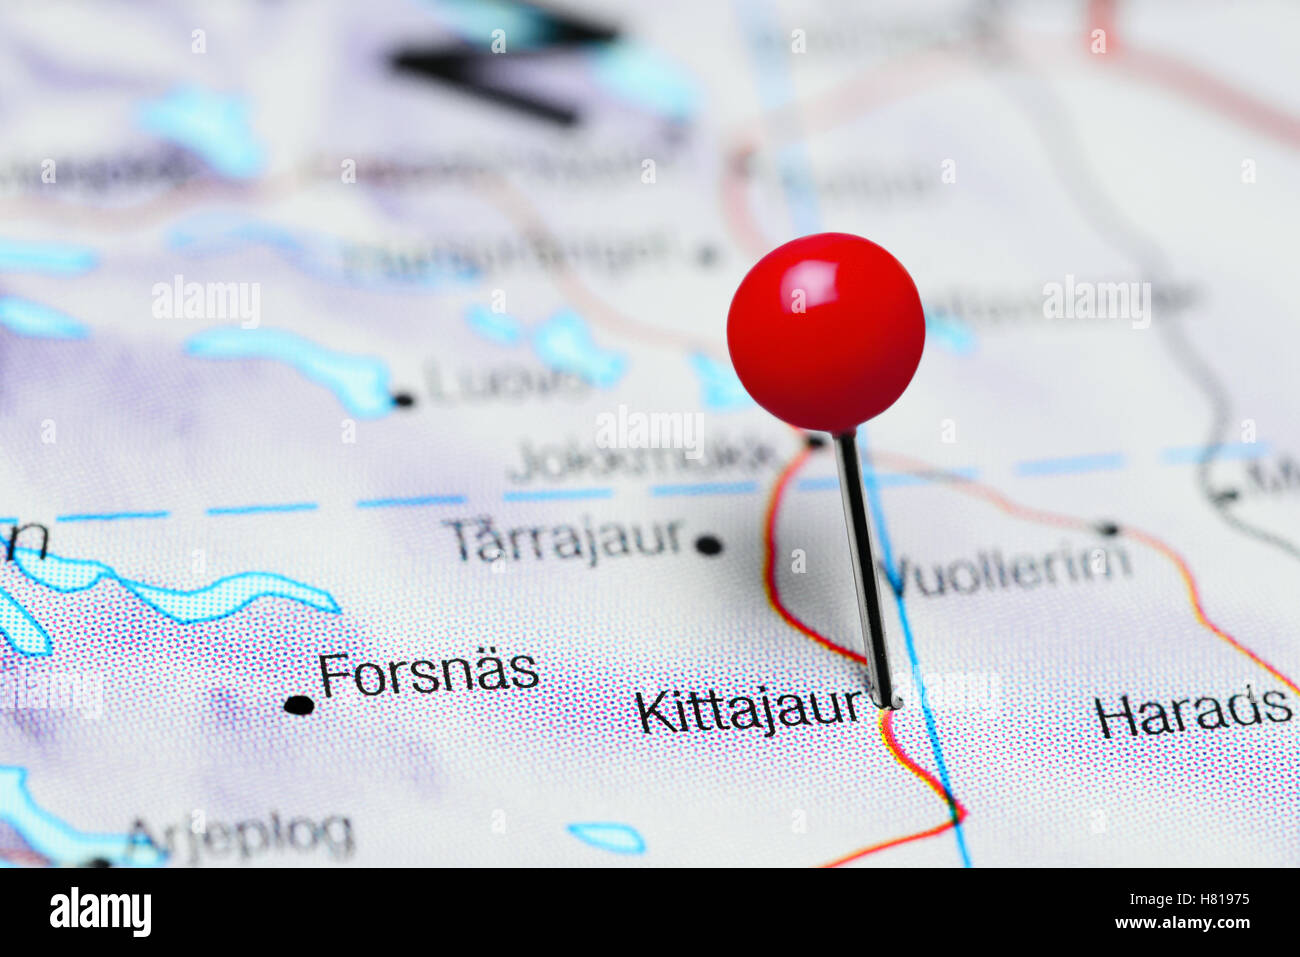 Kittajaur pinned on a map of Sweden Stock Photo